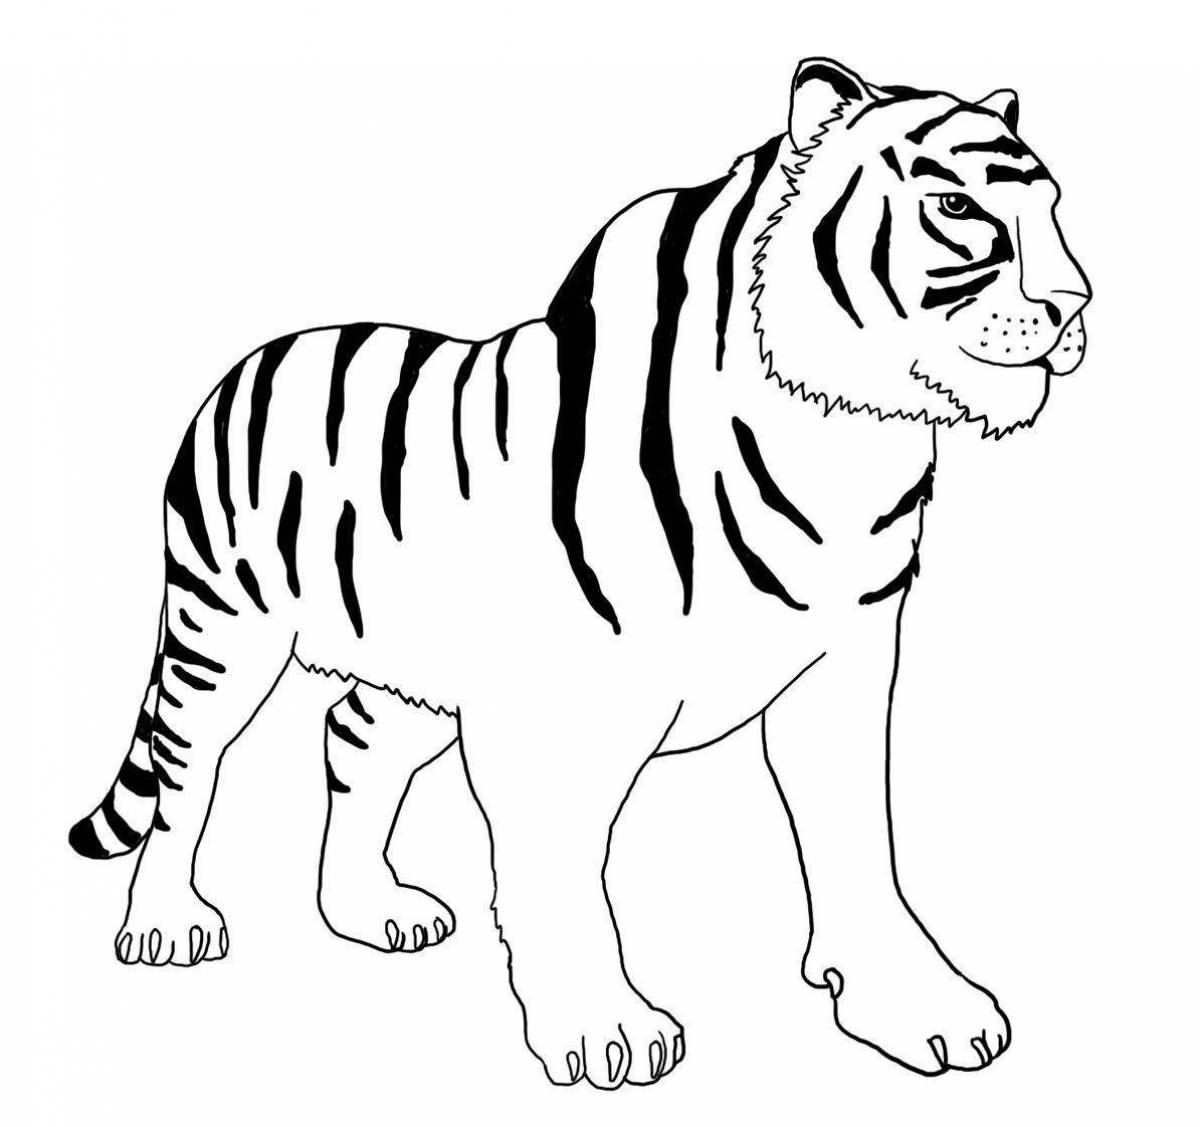 Charming Amur tiger coloring book